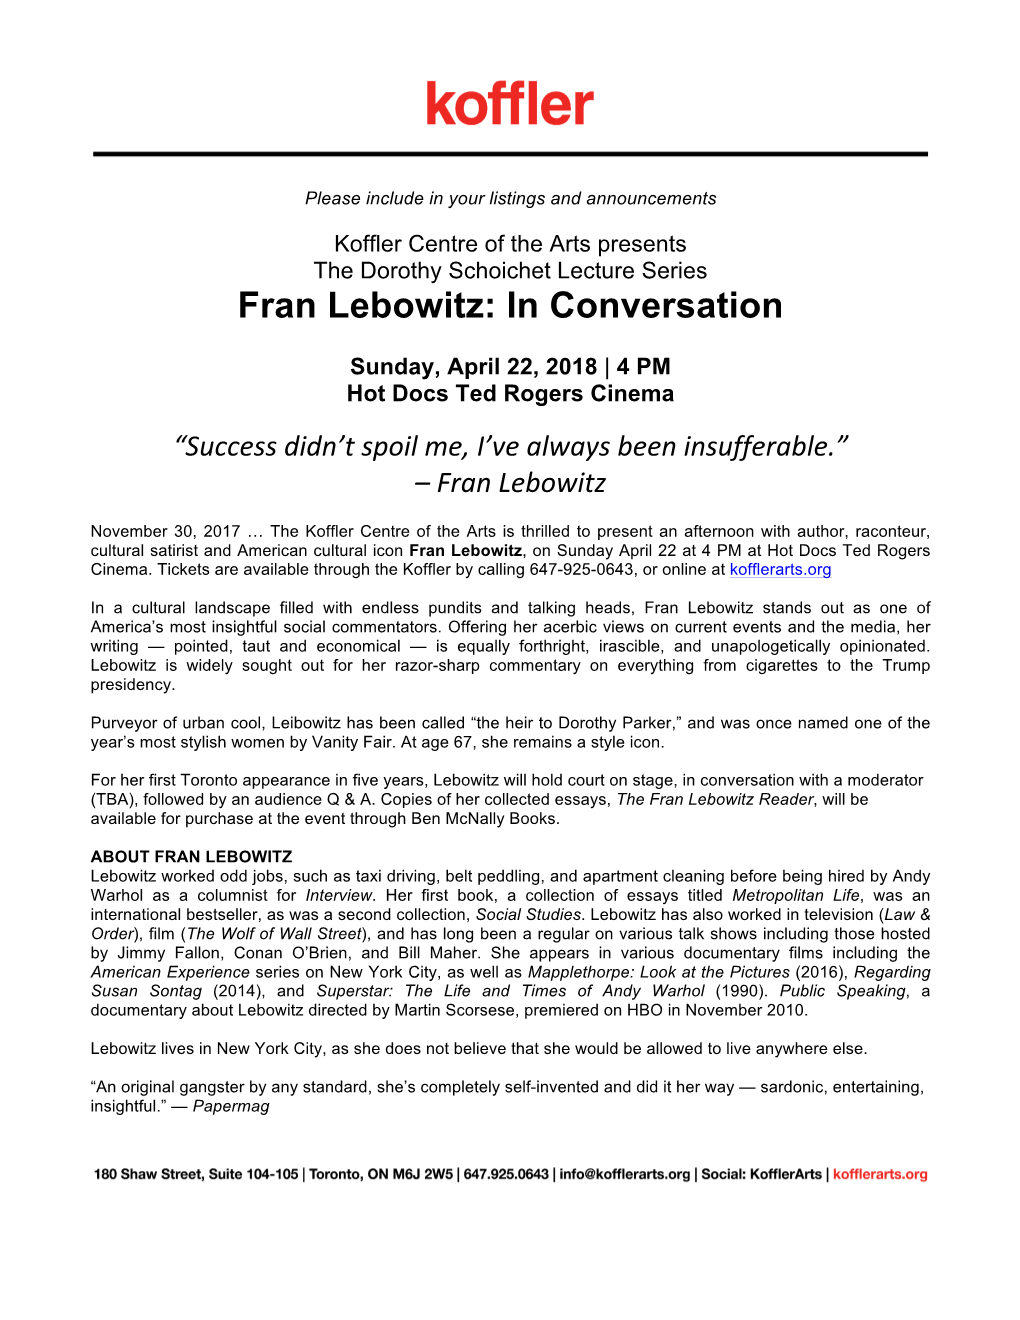 Koffler Centre of the Arts Presents Fran Lebowitz: in Conversation